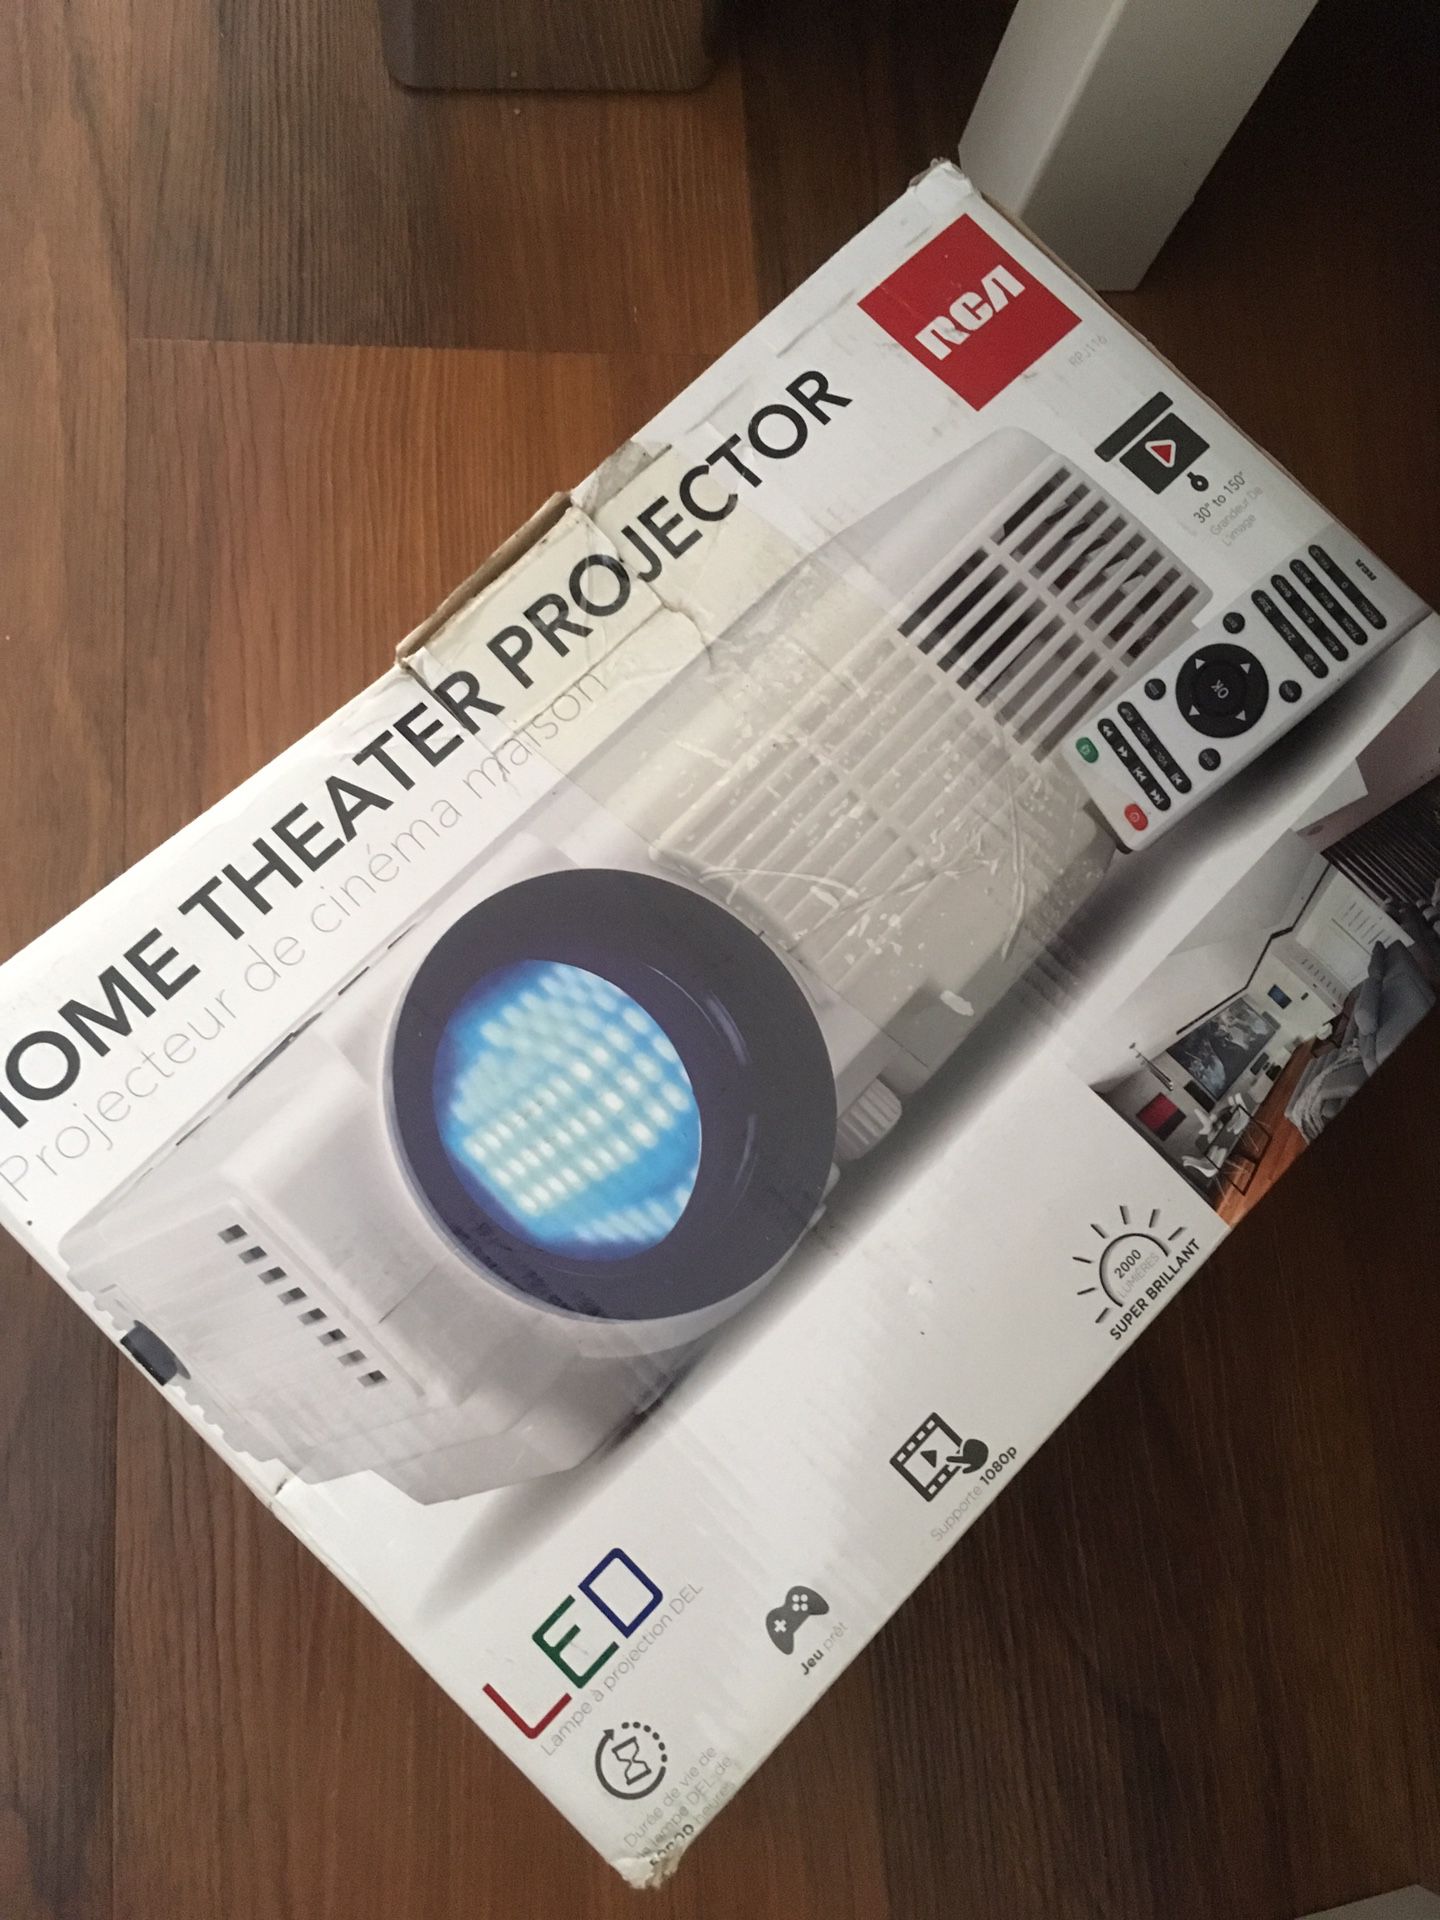 RCA home theather projector HDMI VGA Sd card